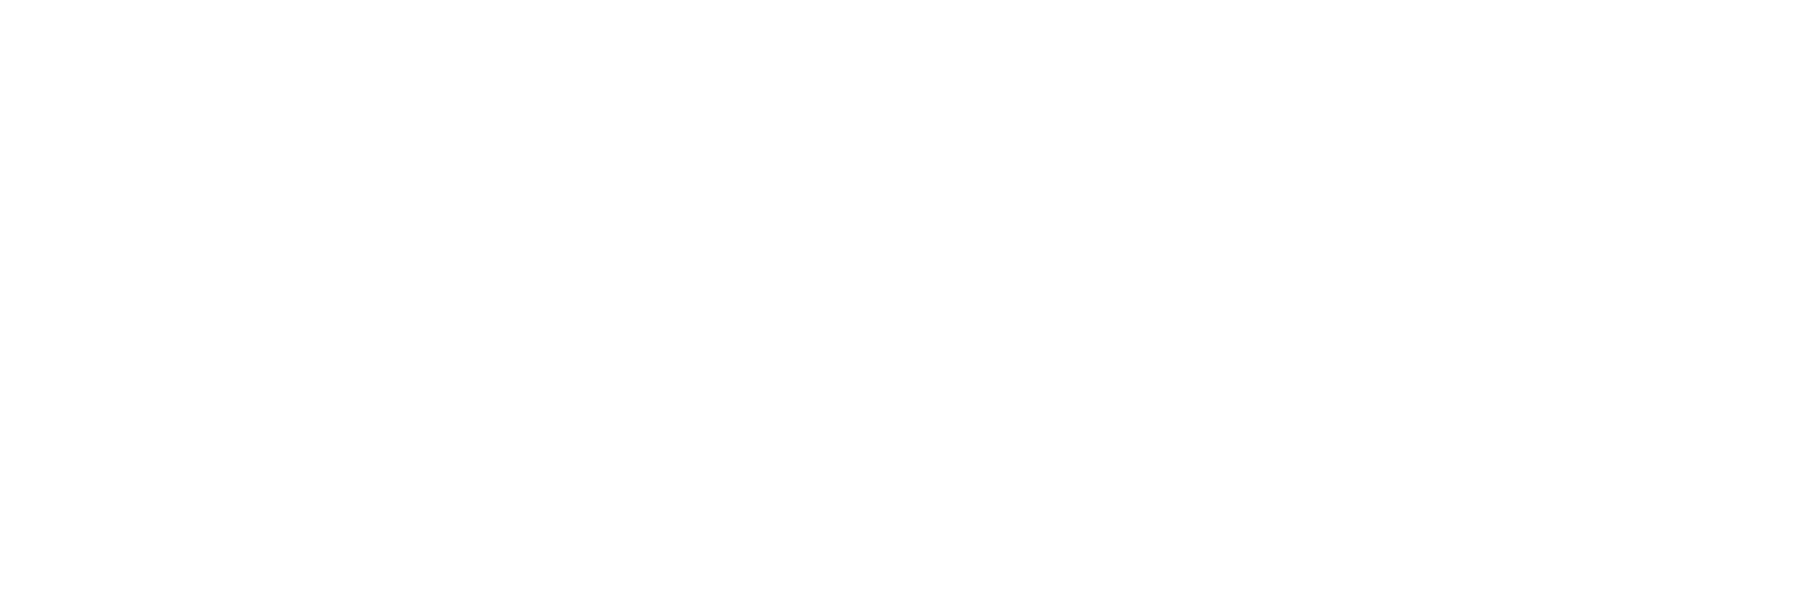 Informa Tech Automotive Awards